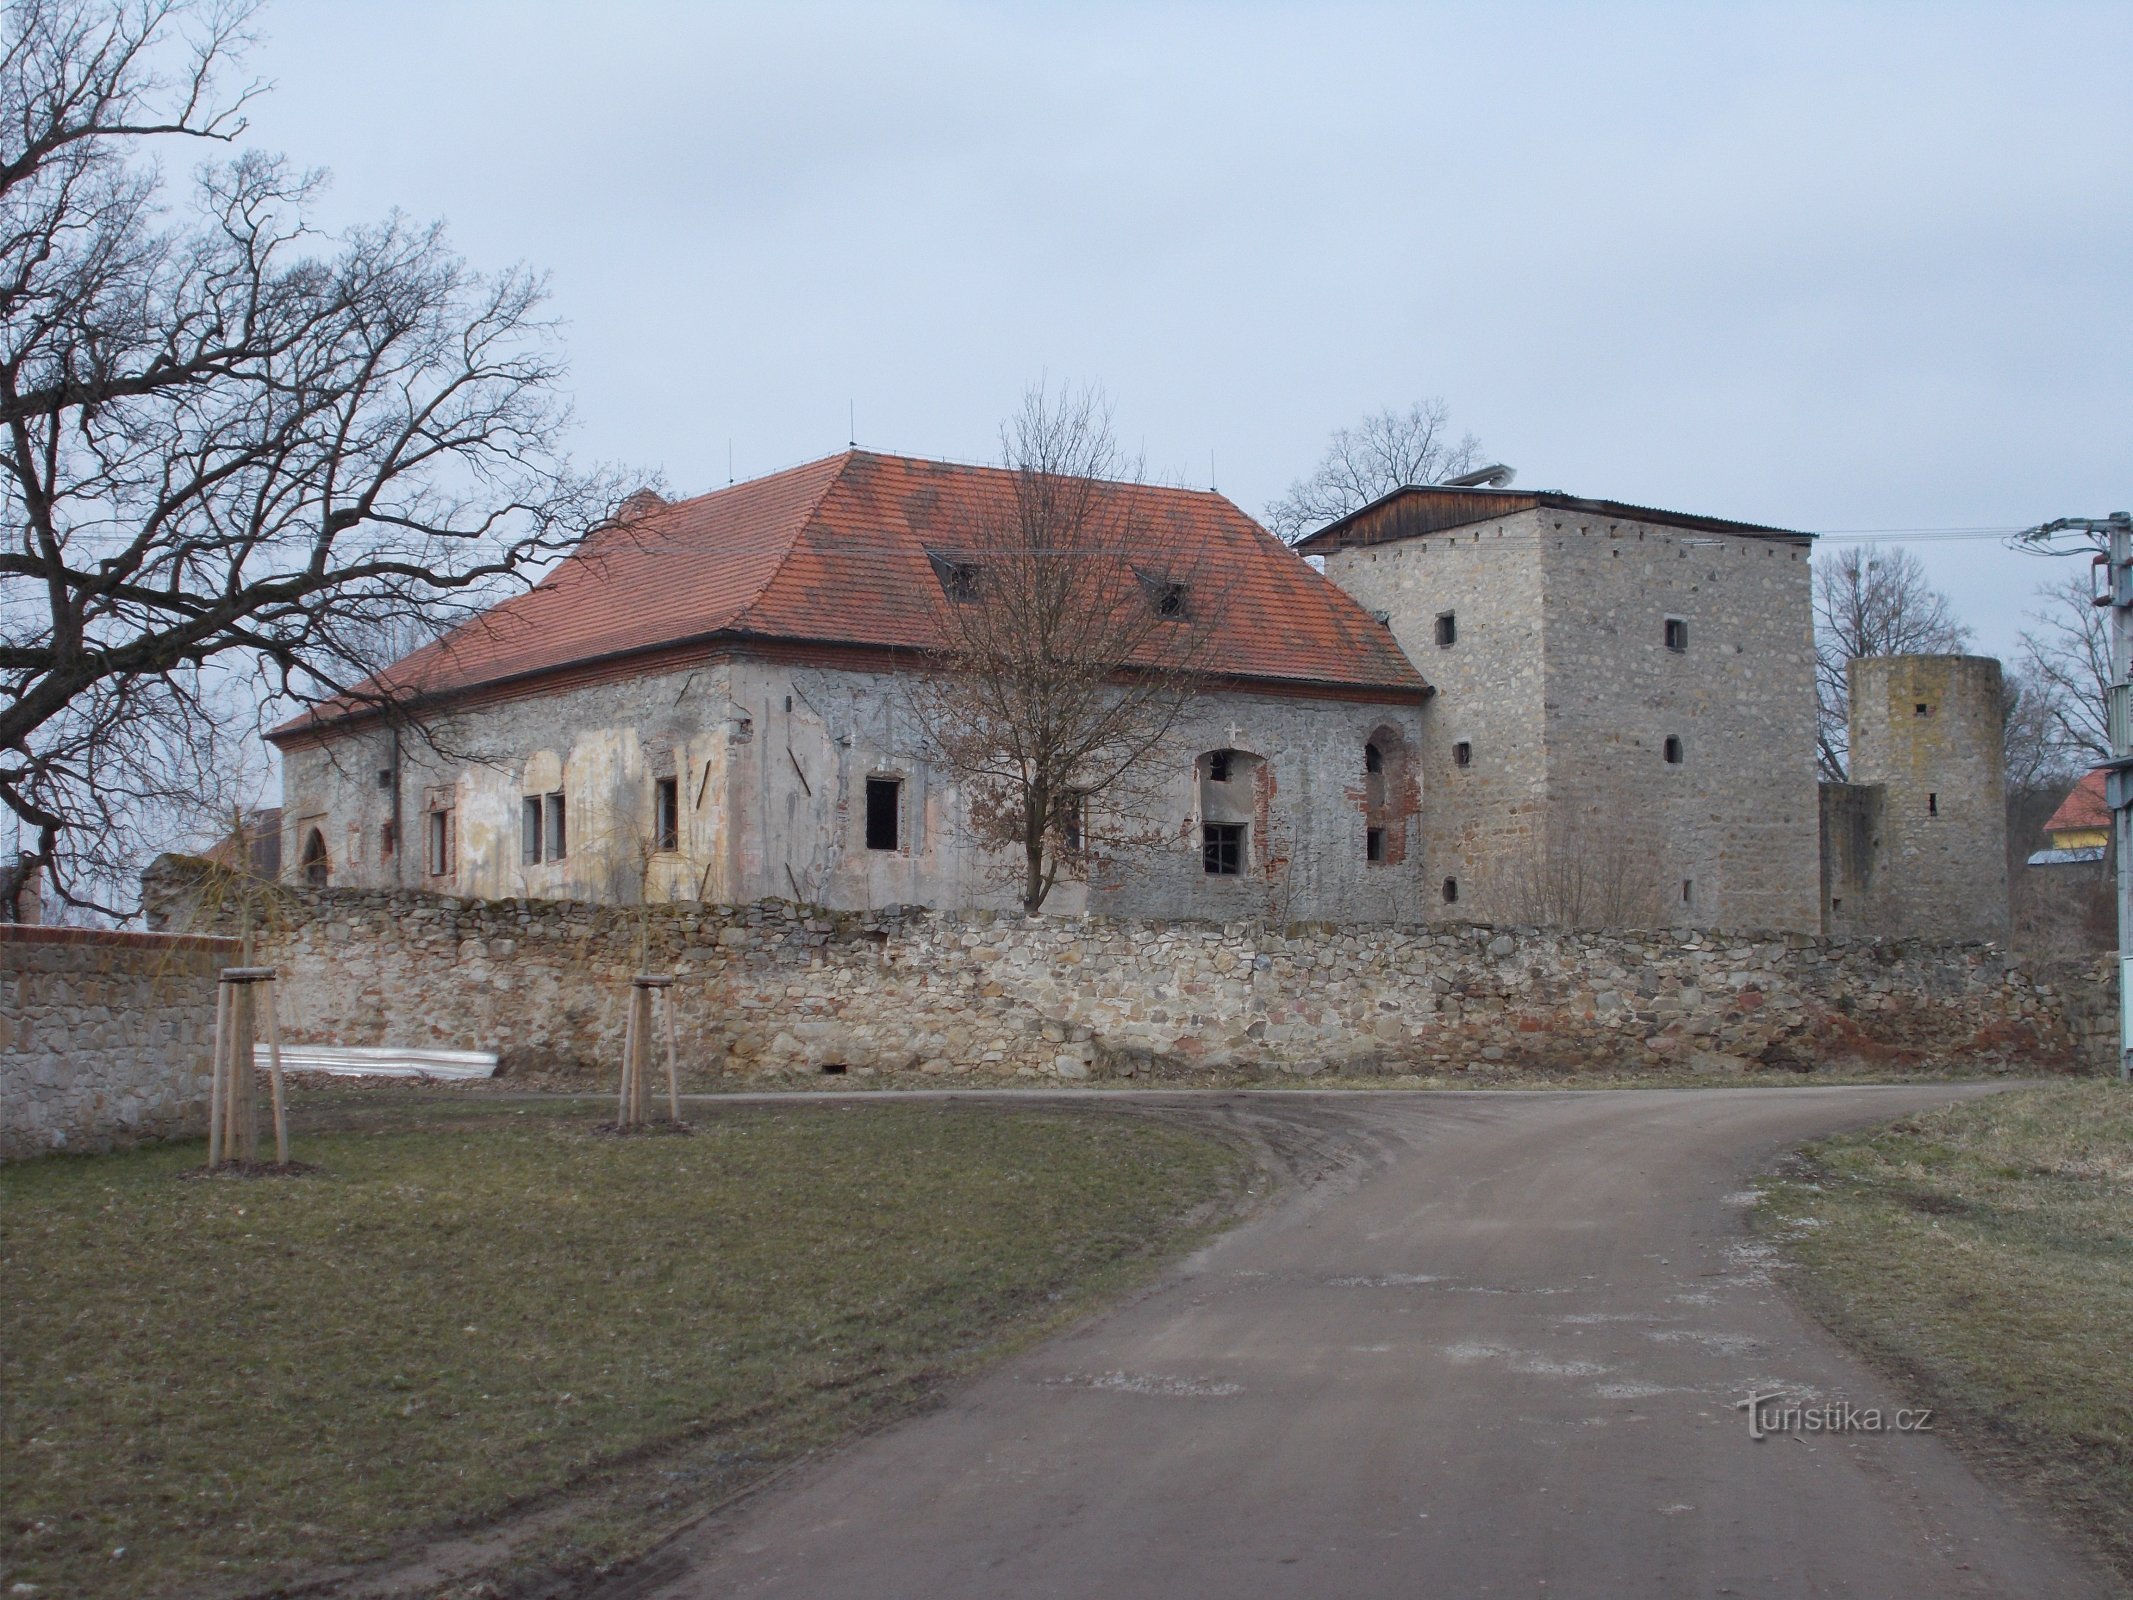 Kestřany - Upper fortress